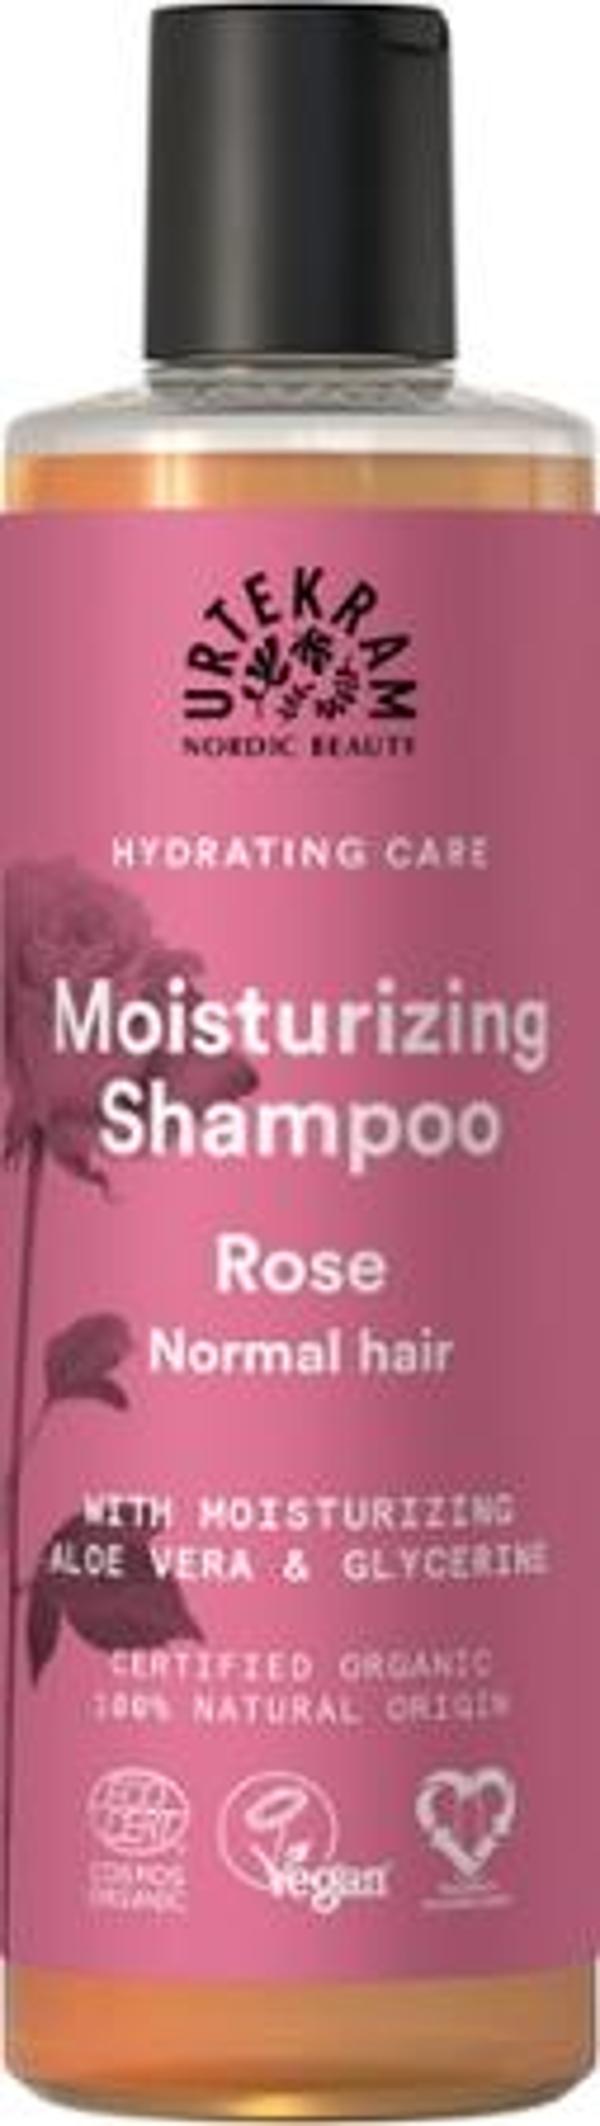 Produktfoto zu Moisturizing Shampoo Rose